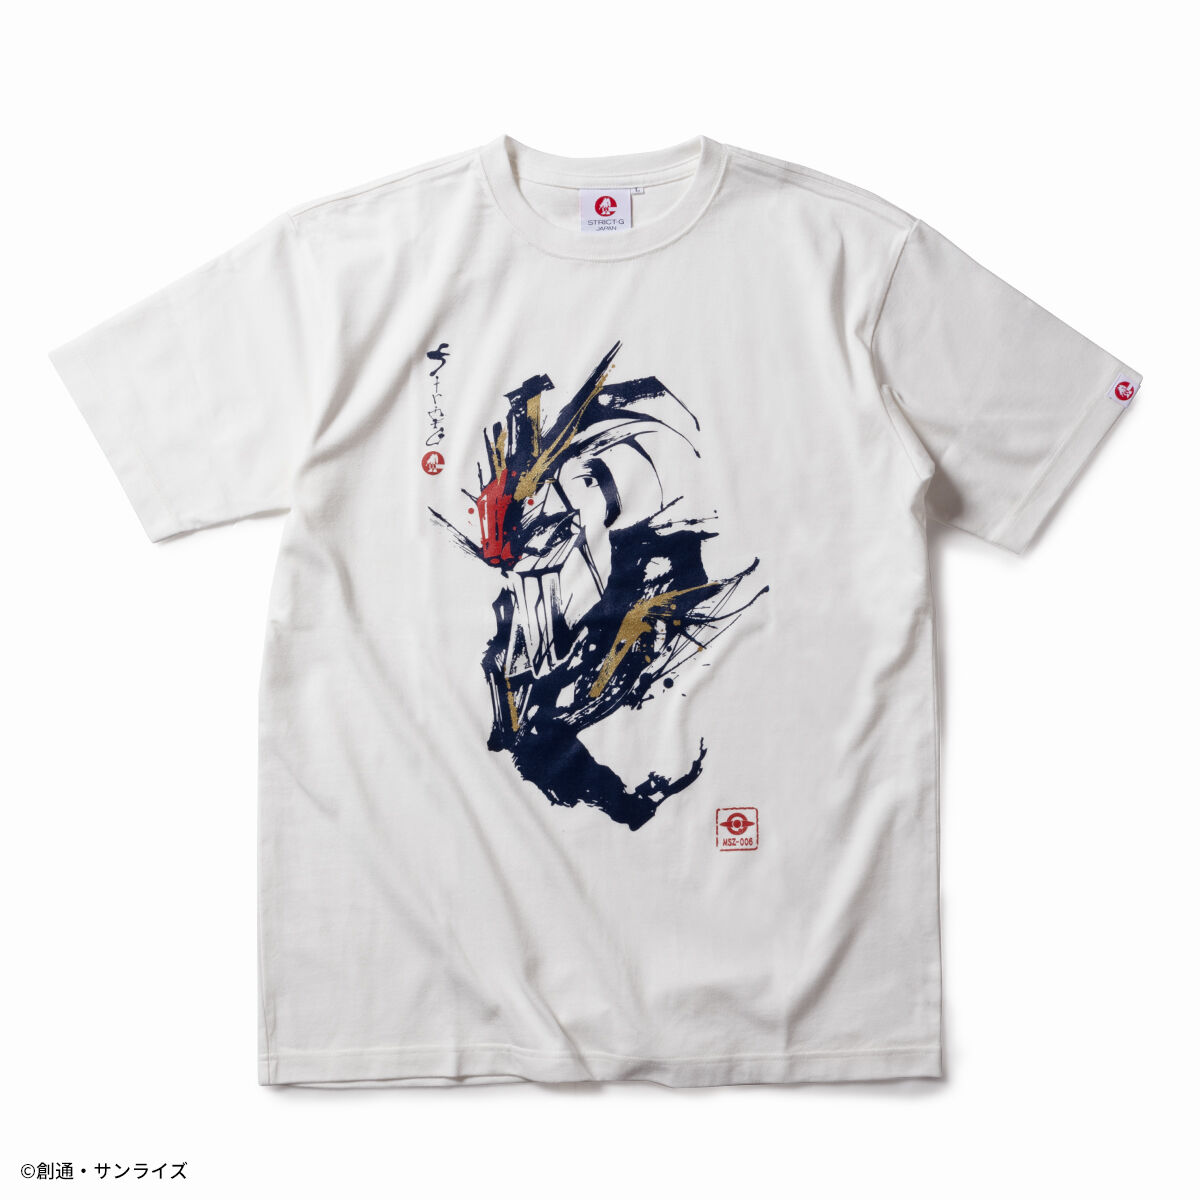 STRICT-G JAPAN『機動戦士Zガンダム』Tシャツ 筆絵風Zガンダム横柄 